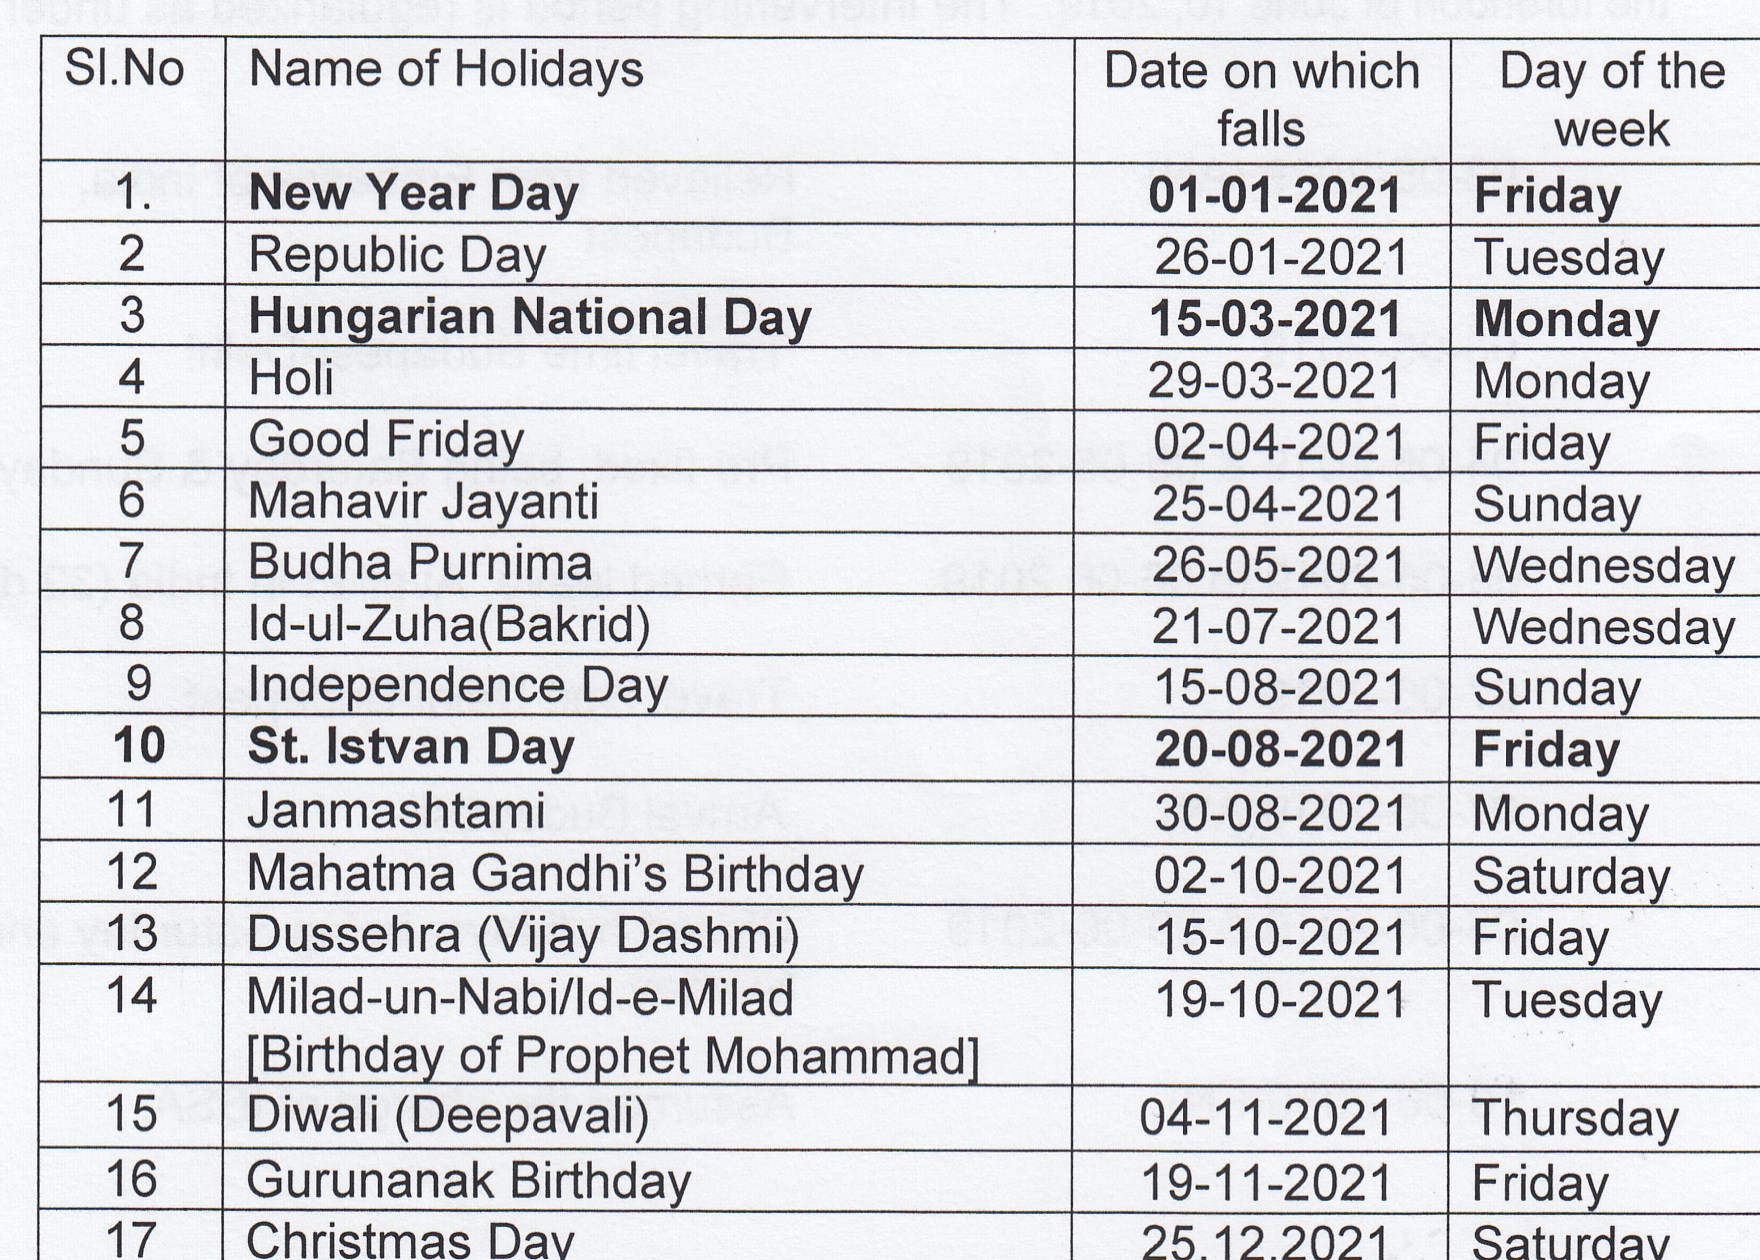 Embassy of India,Hungary and Bosnia & Herzegovina : Holidays at the Embassy